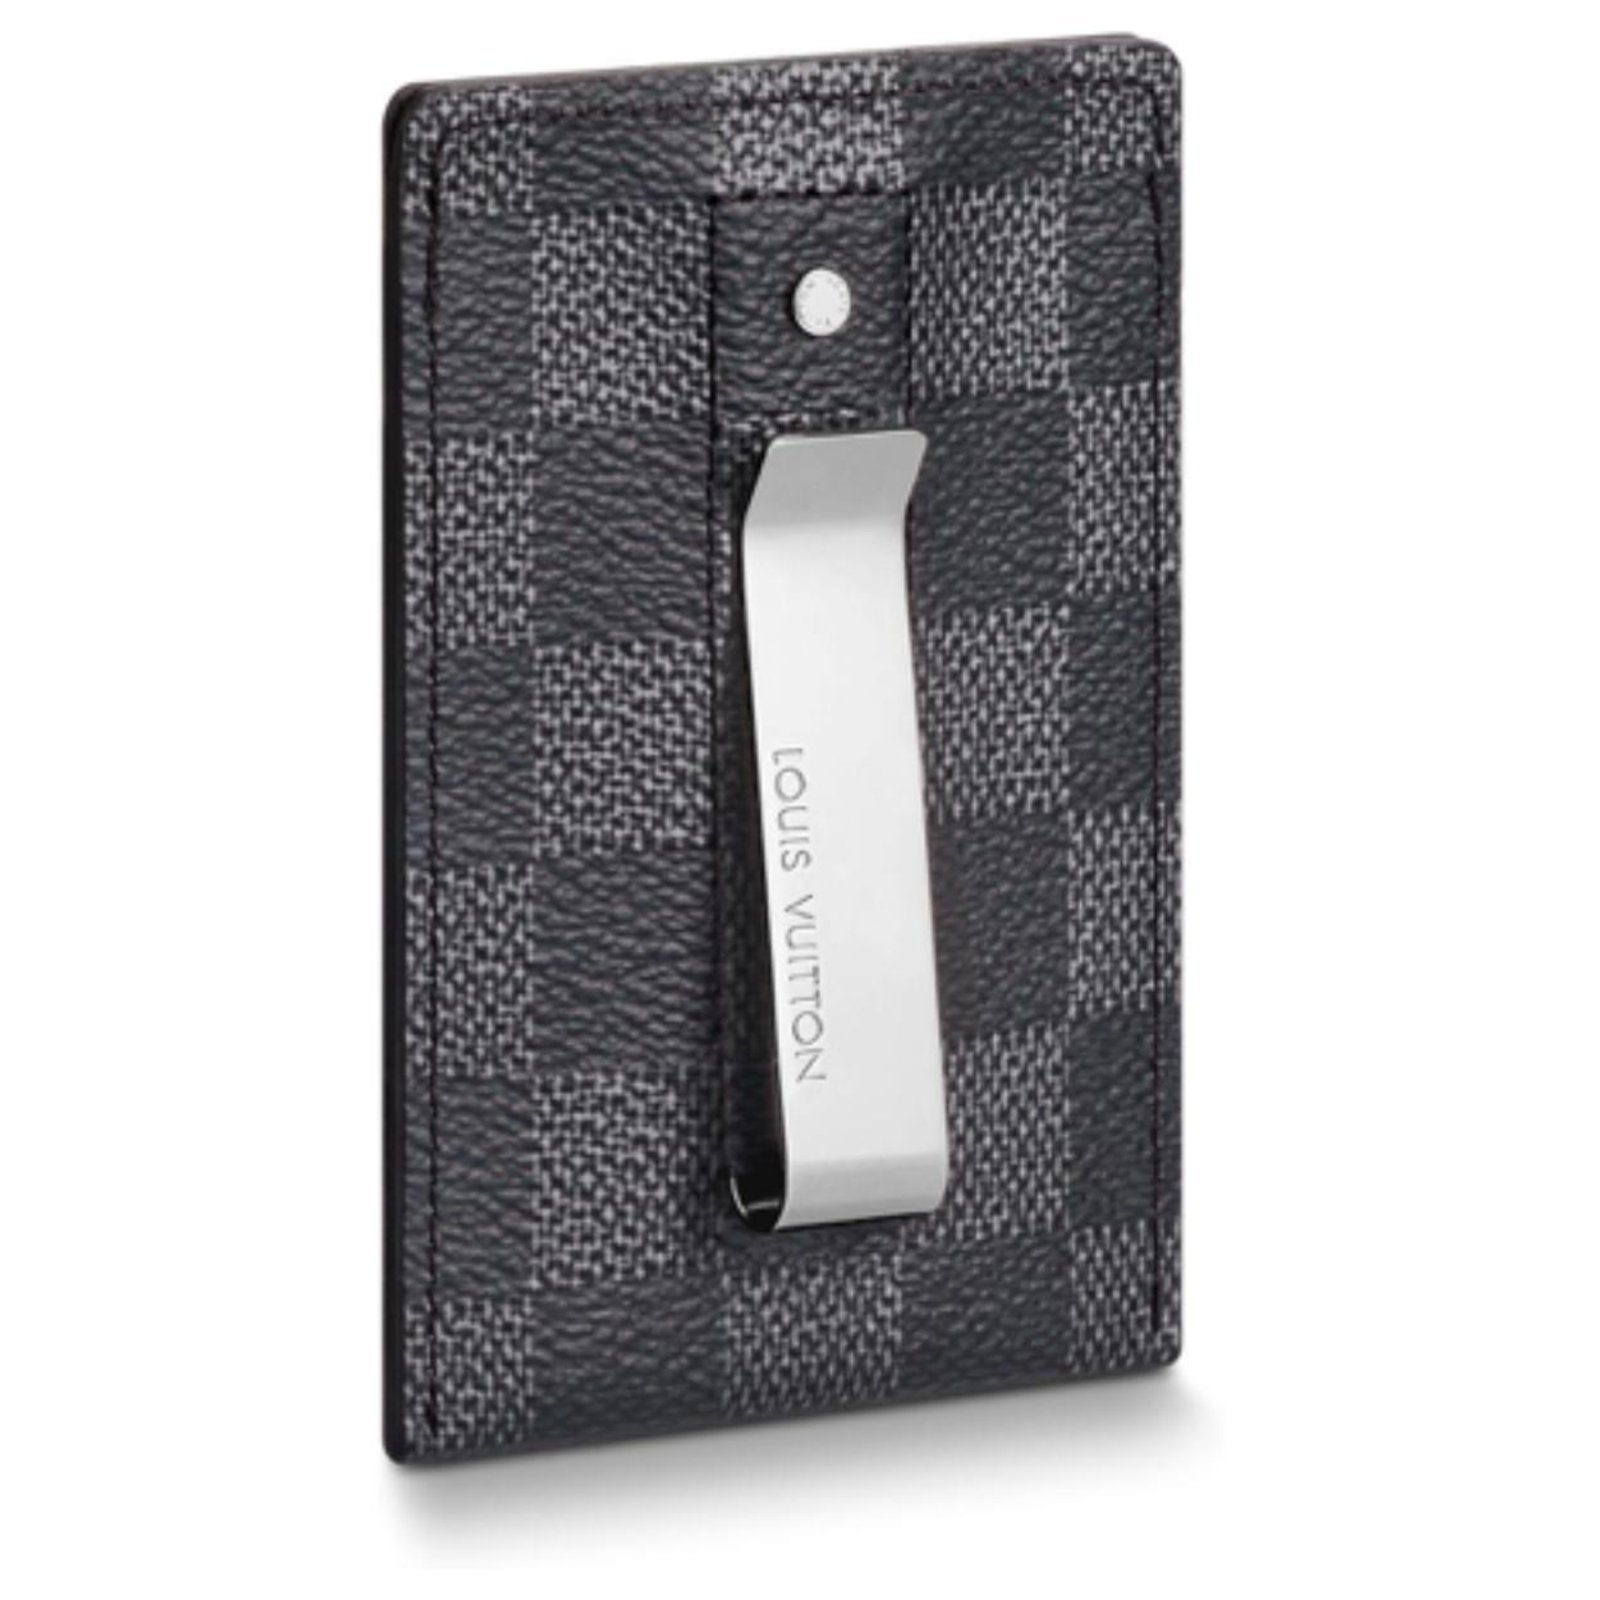 Louis Vuitton Damier Pince Card Holder with Bill Clip, Grey